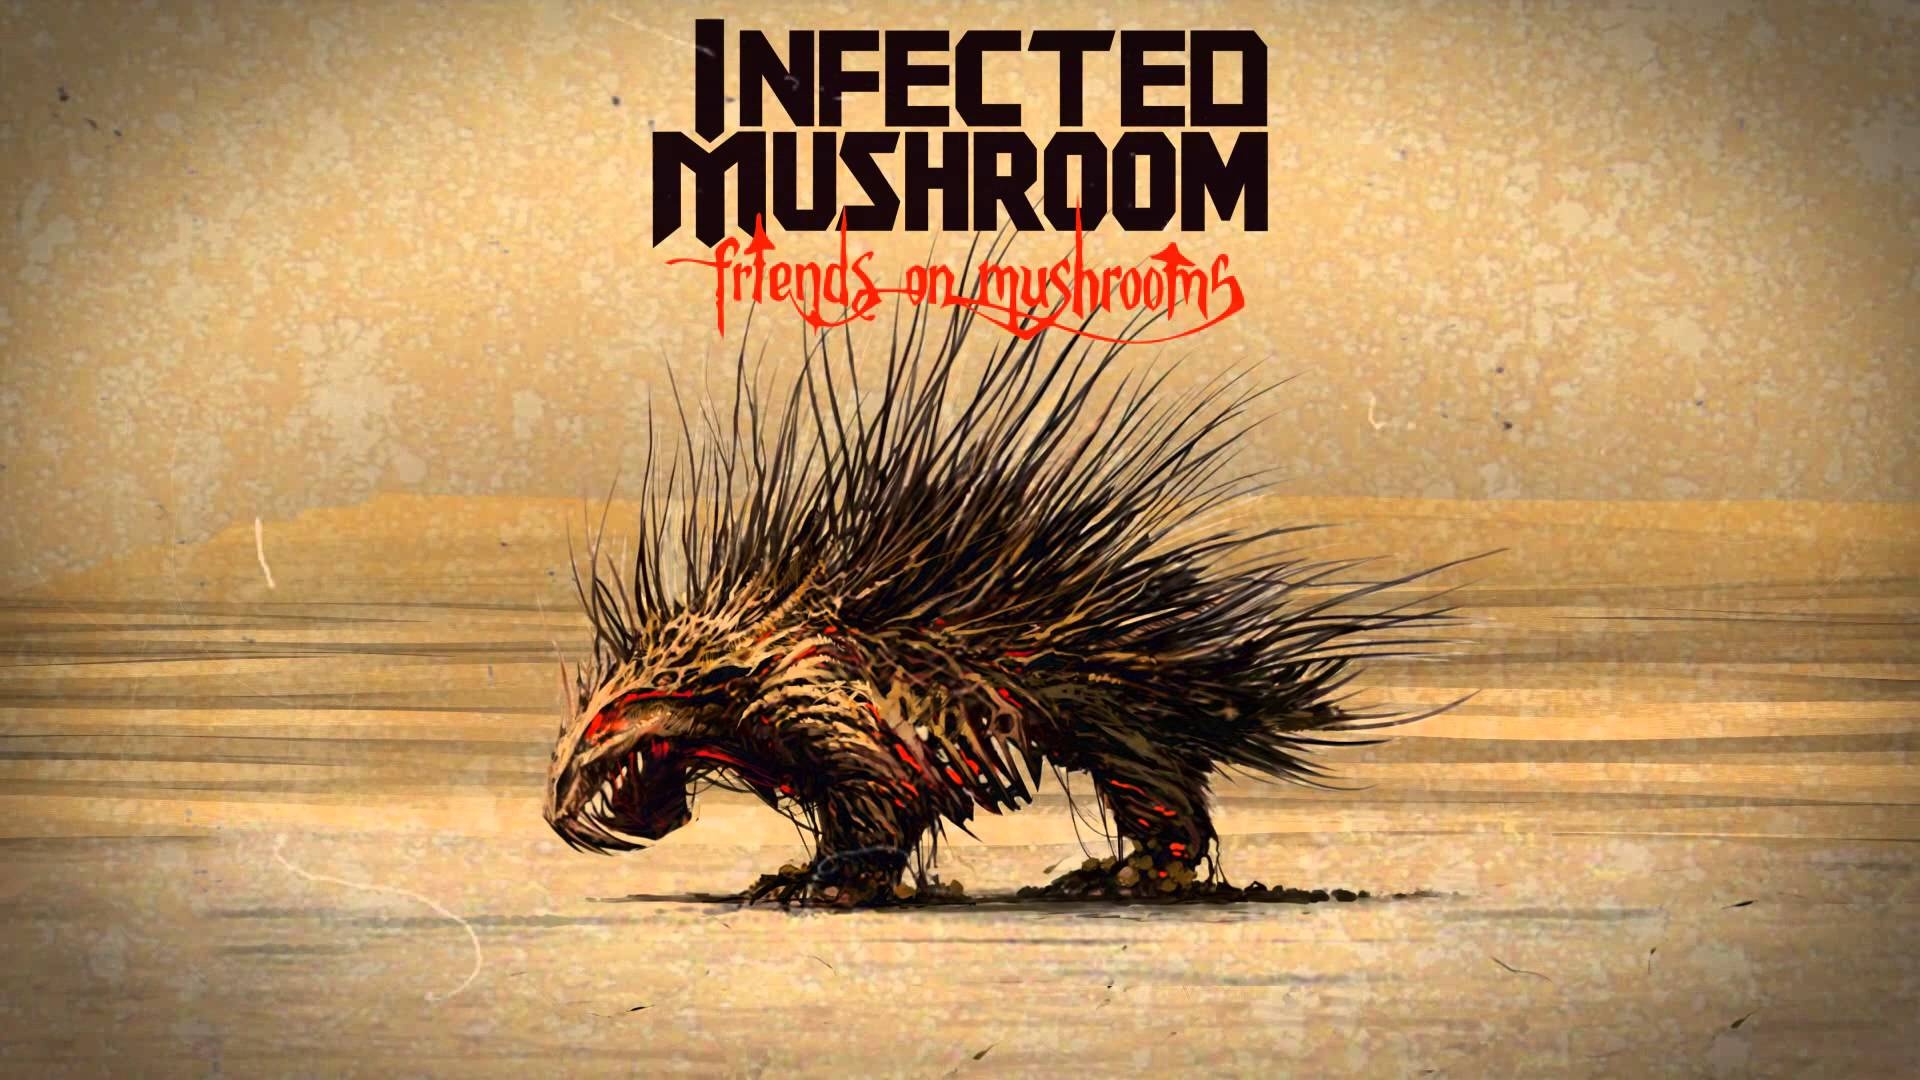 Friends on Mushrooms, Infected Mushroom (Band) Wallpaper, 1920x1080 Full HD Desktop